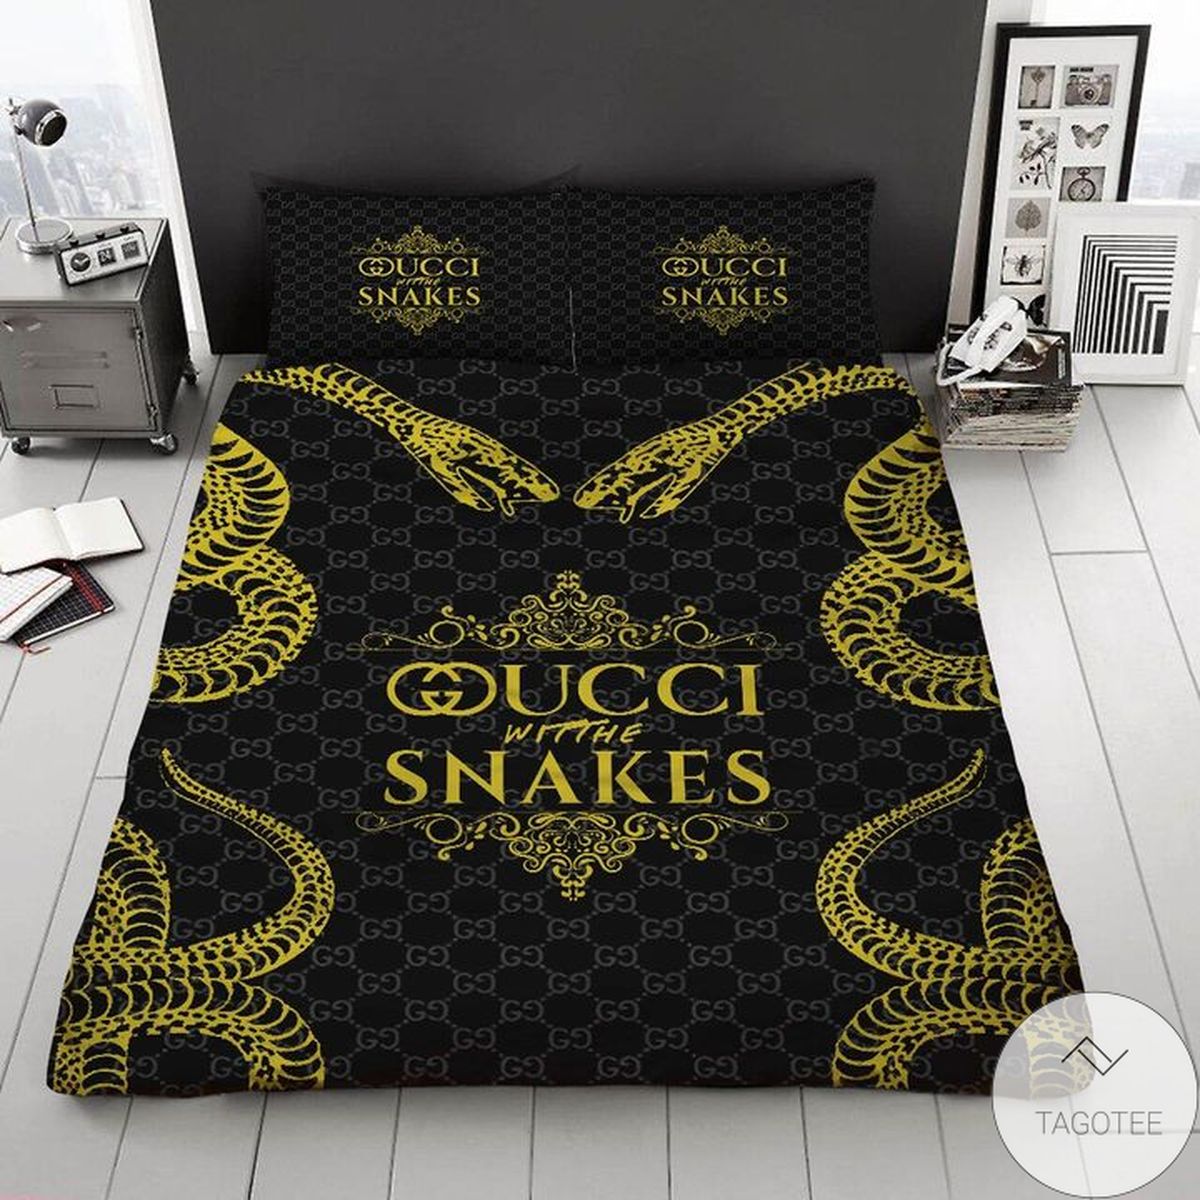 Gucci Snake Bedding Set